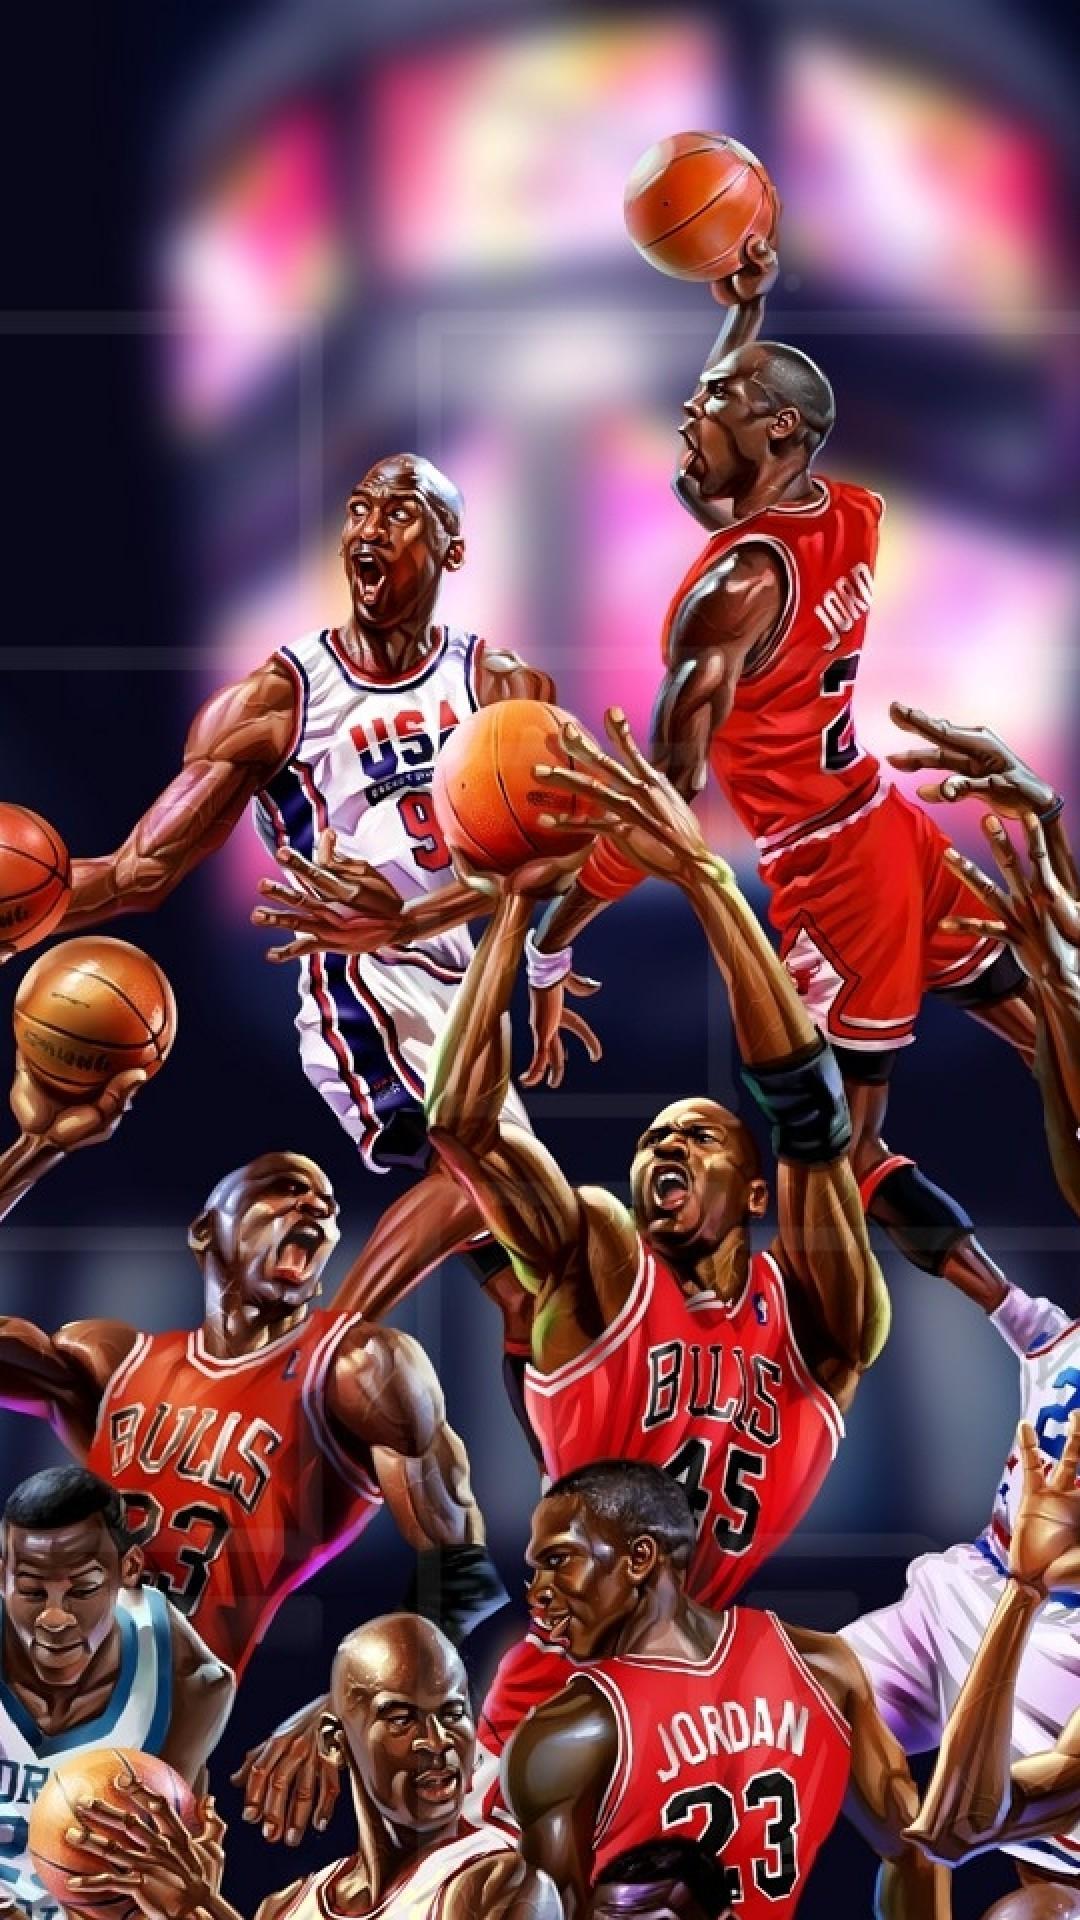 1080 x 1920 · jpeg - NBA iPhone Wallpapers HD (69+ images)